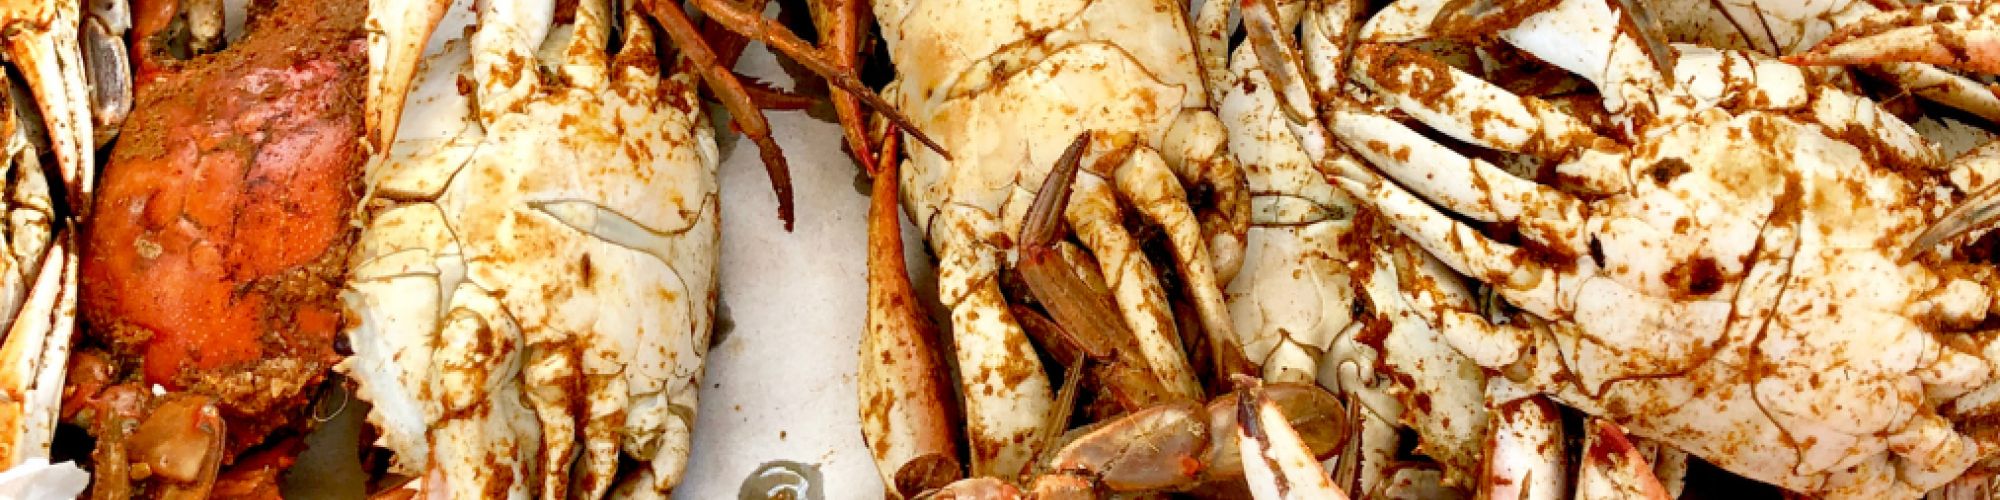 Fall Crabs & Seafood